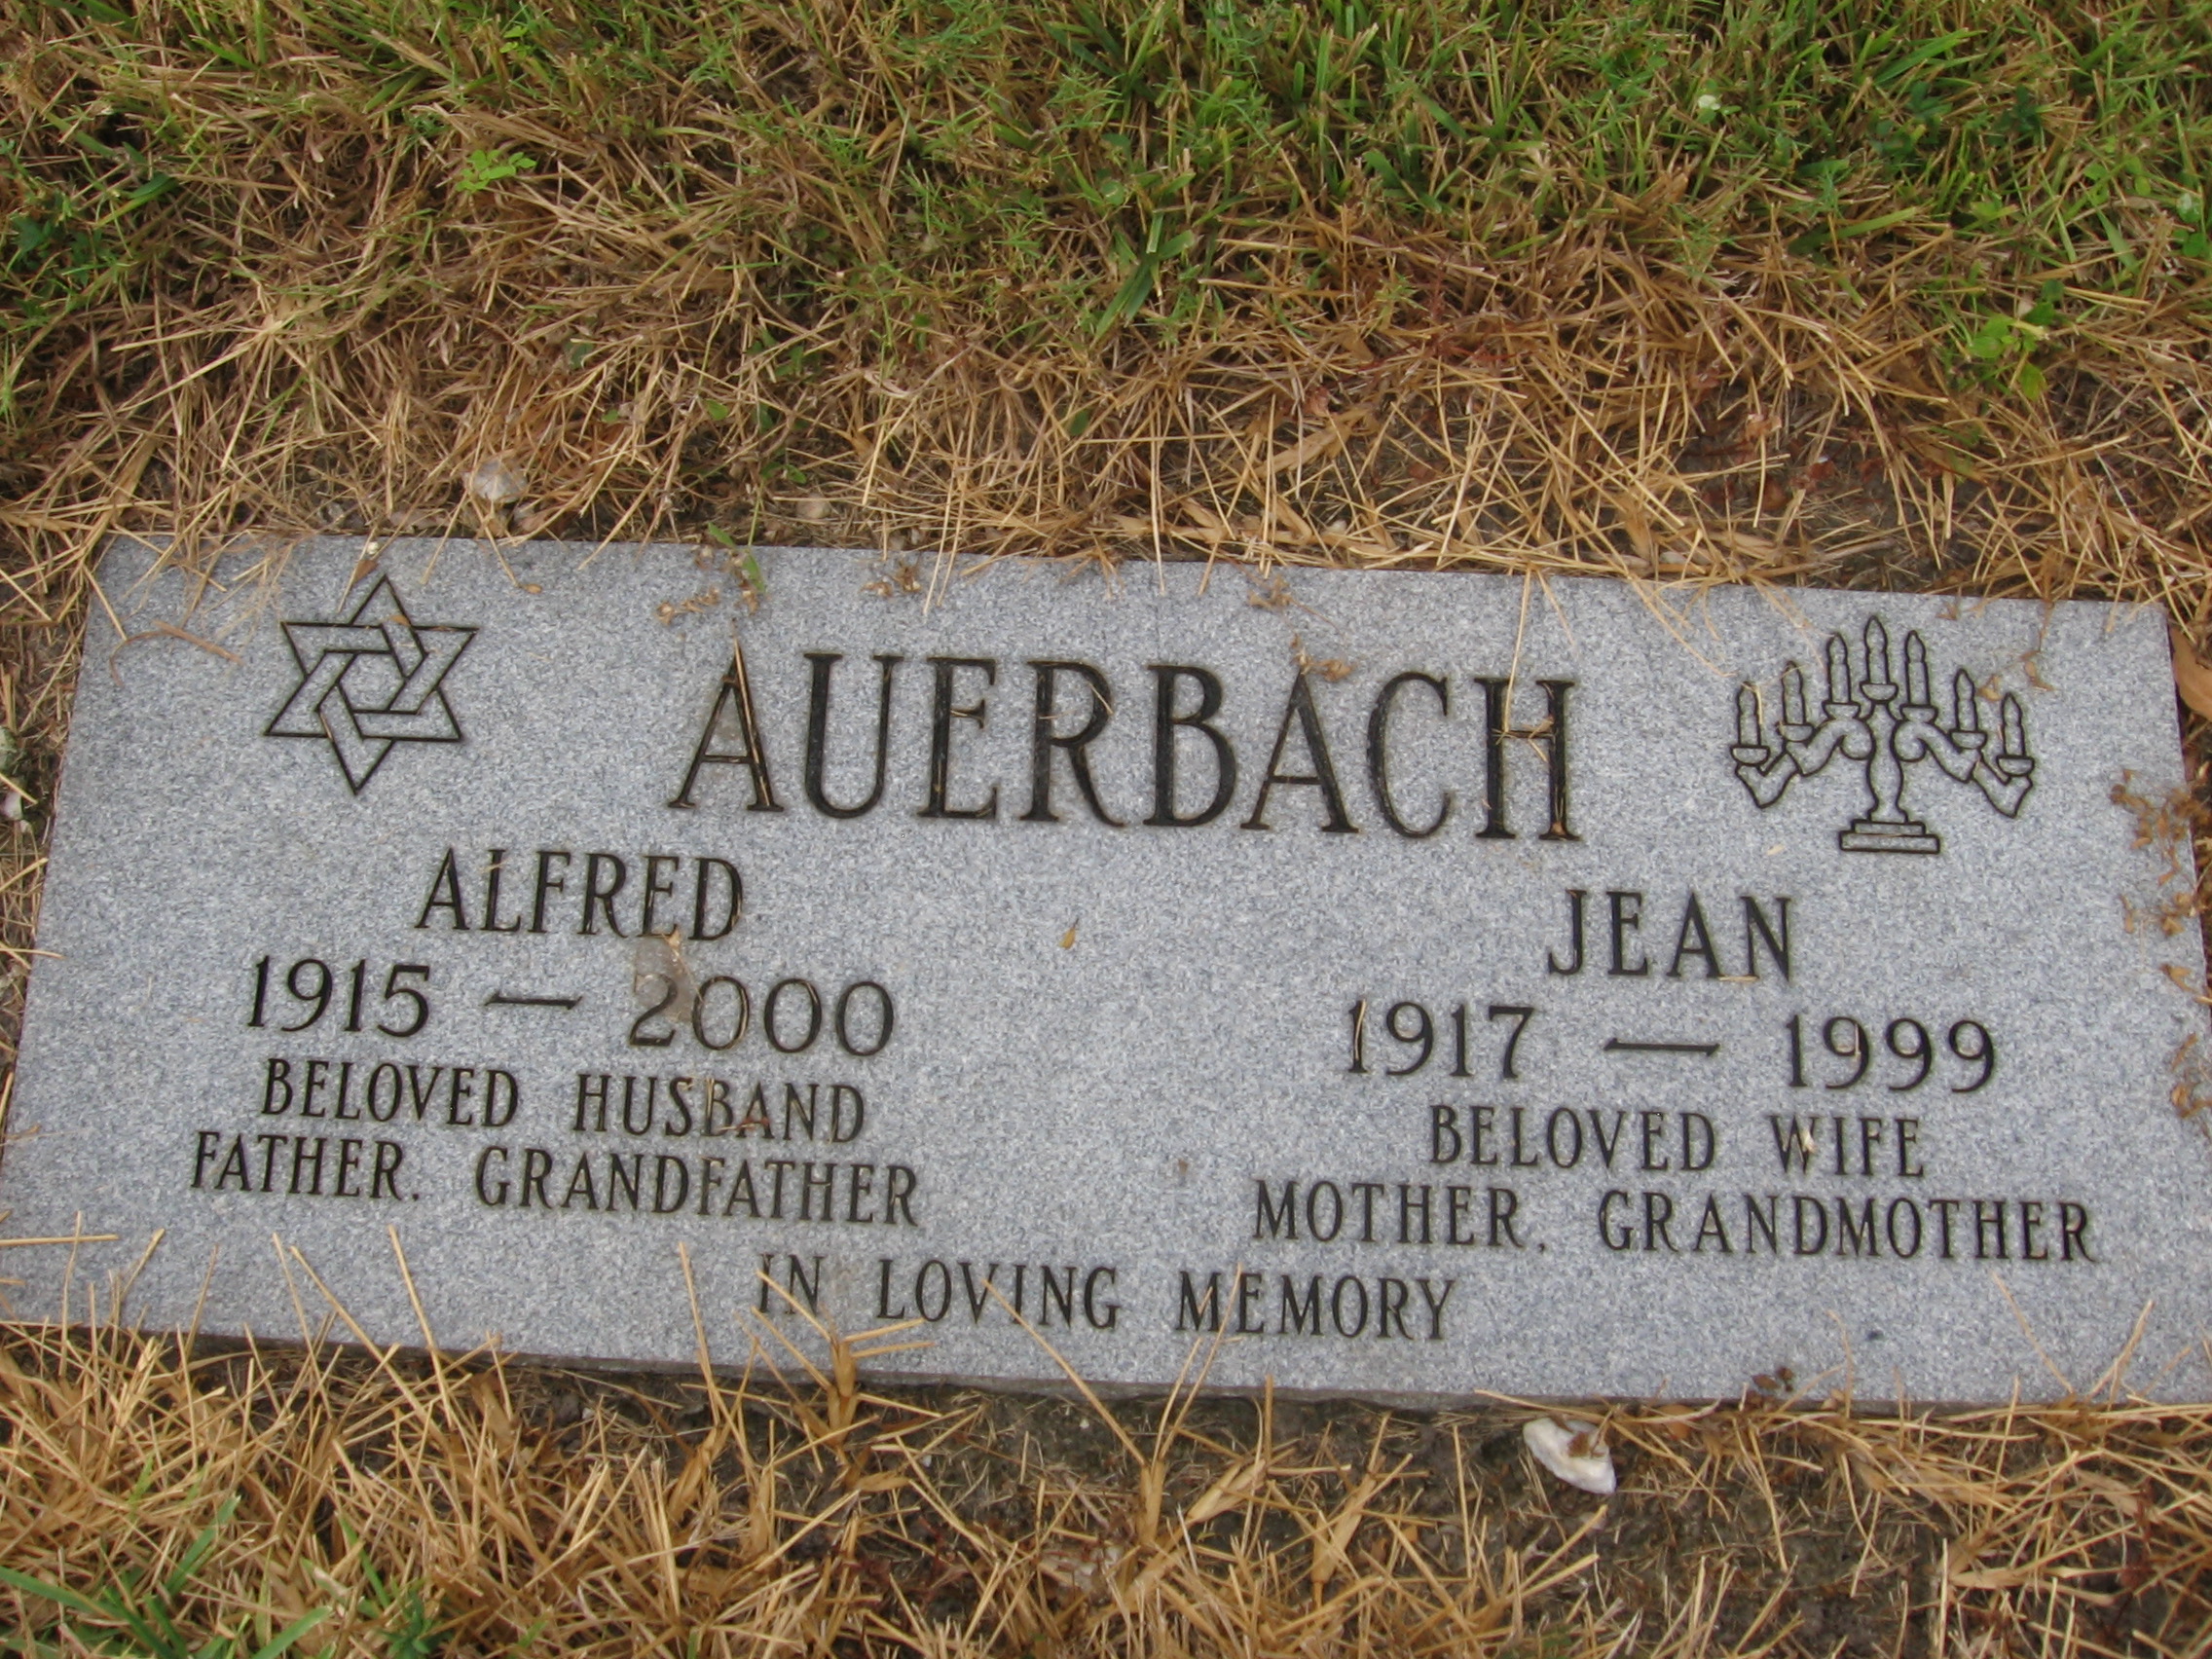 Alfred Auerbach